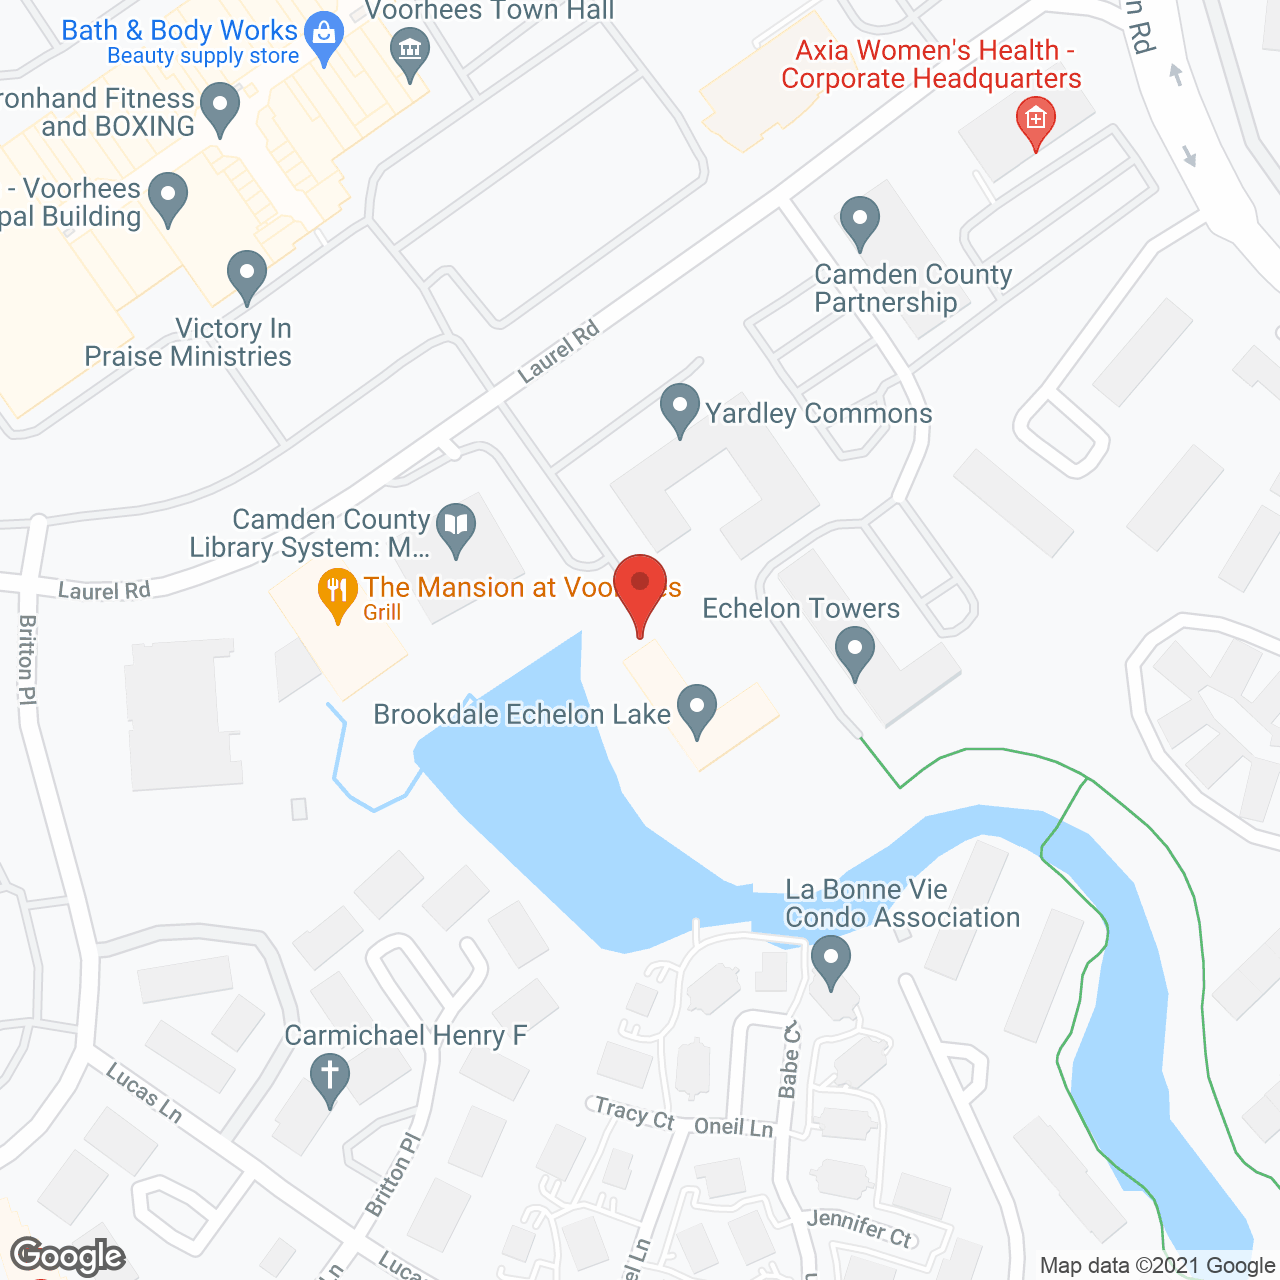 Brookdale Echelon Lake in google map